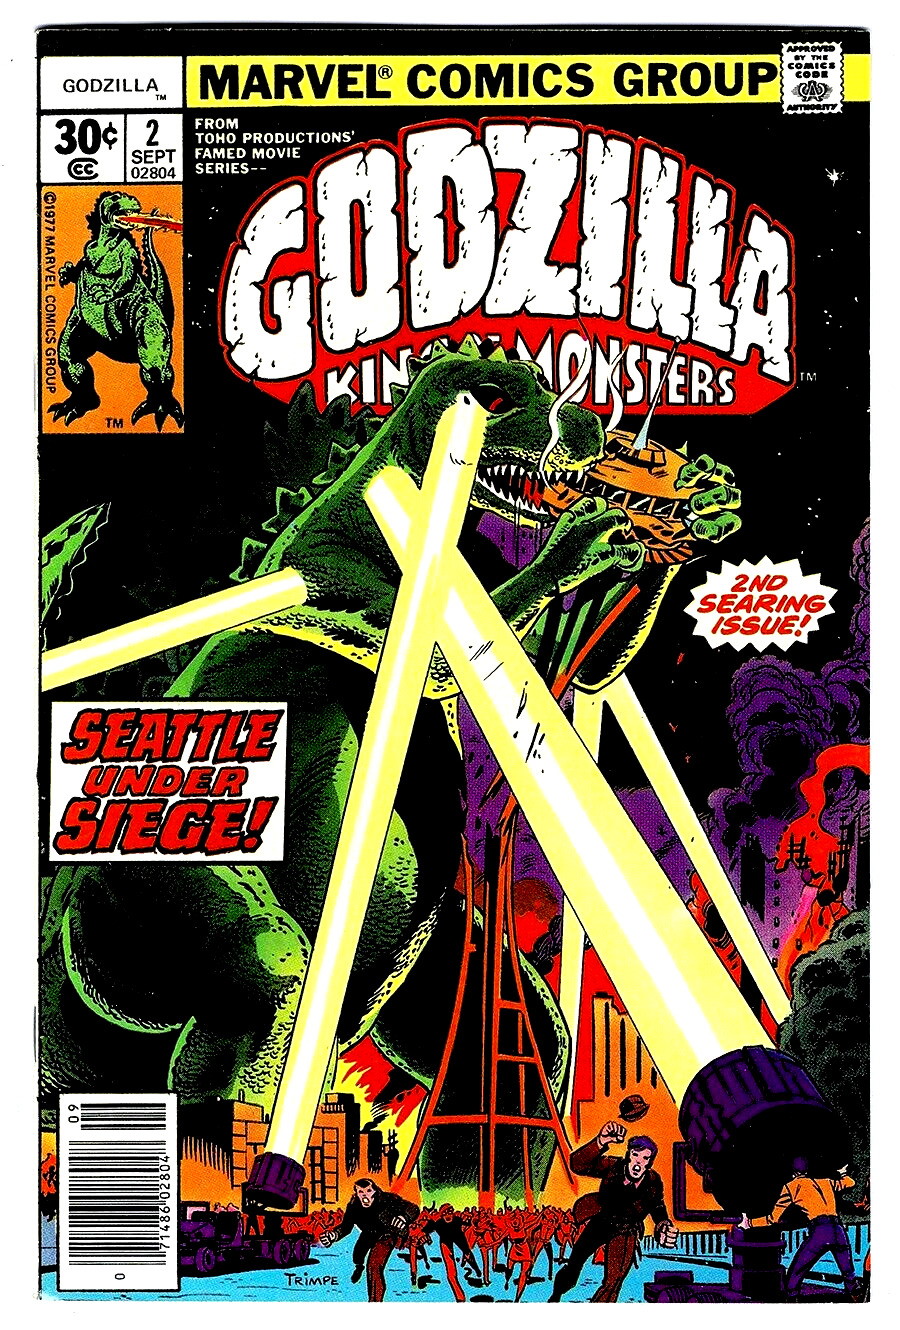 GODZILLA #2 in VF condition a 1977 Marvel Bronze Age comic with SHIELD